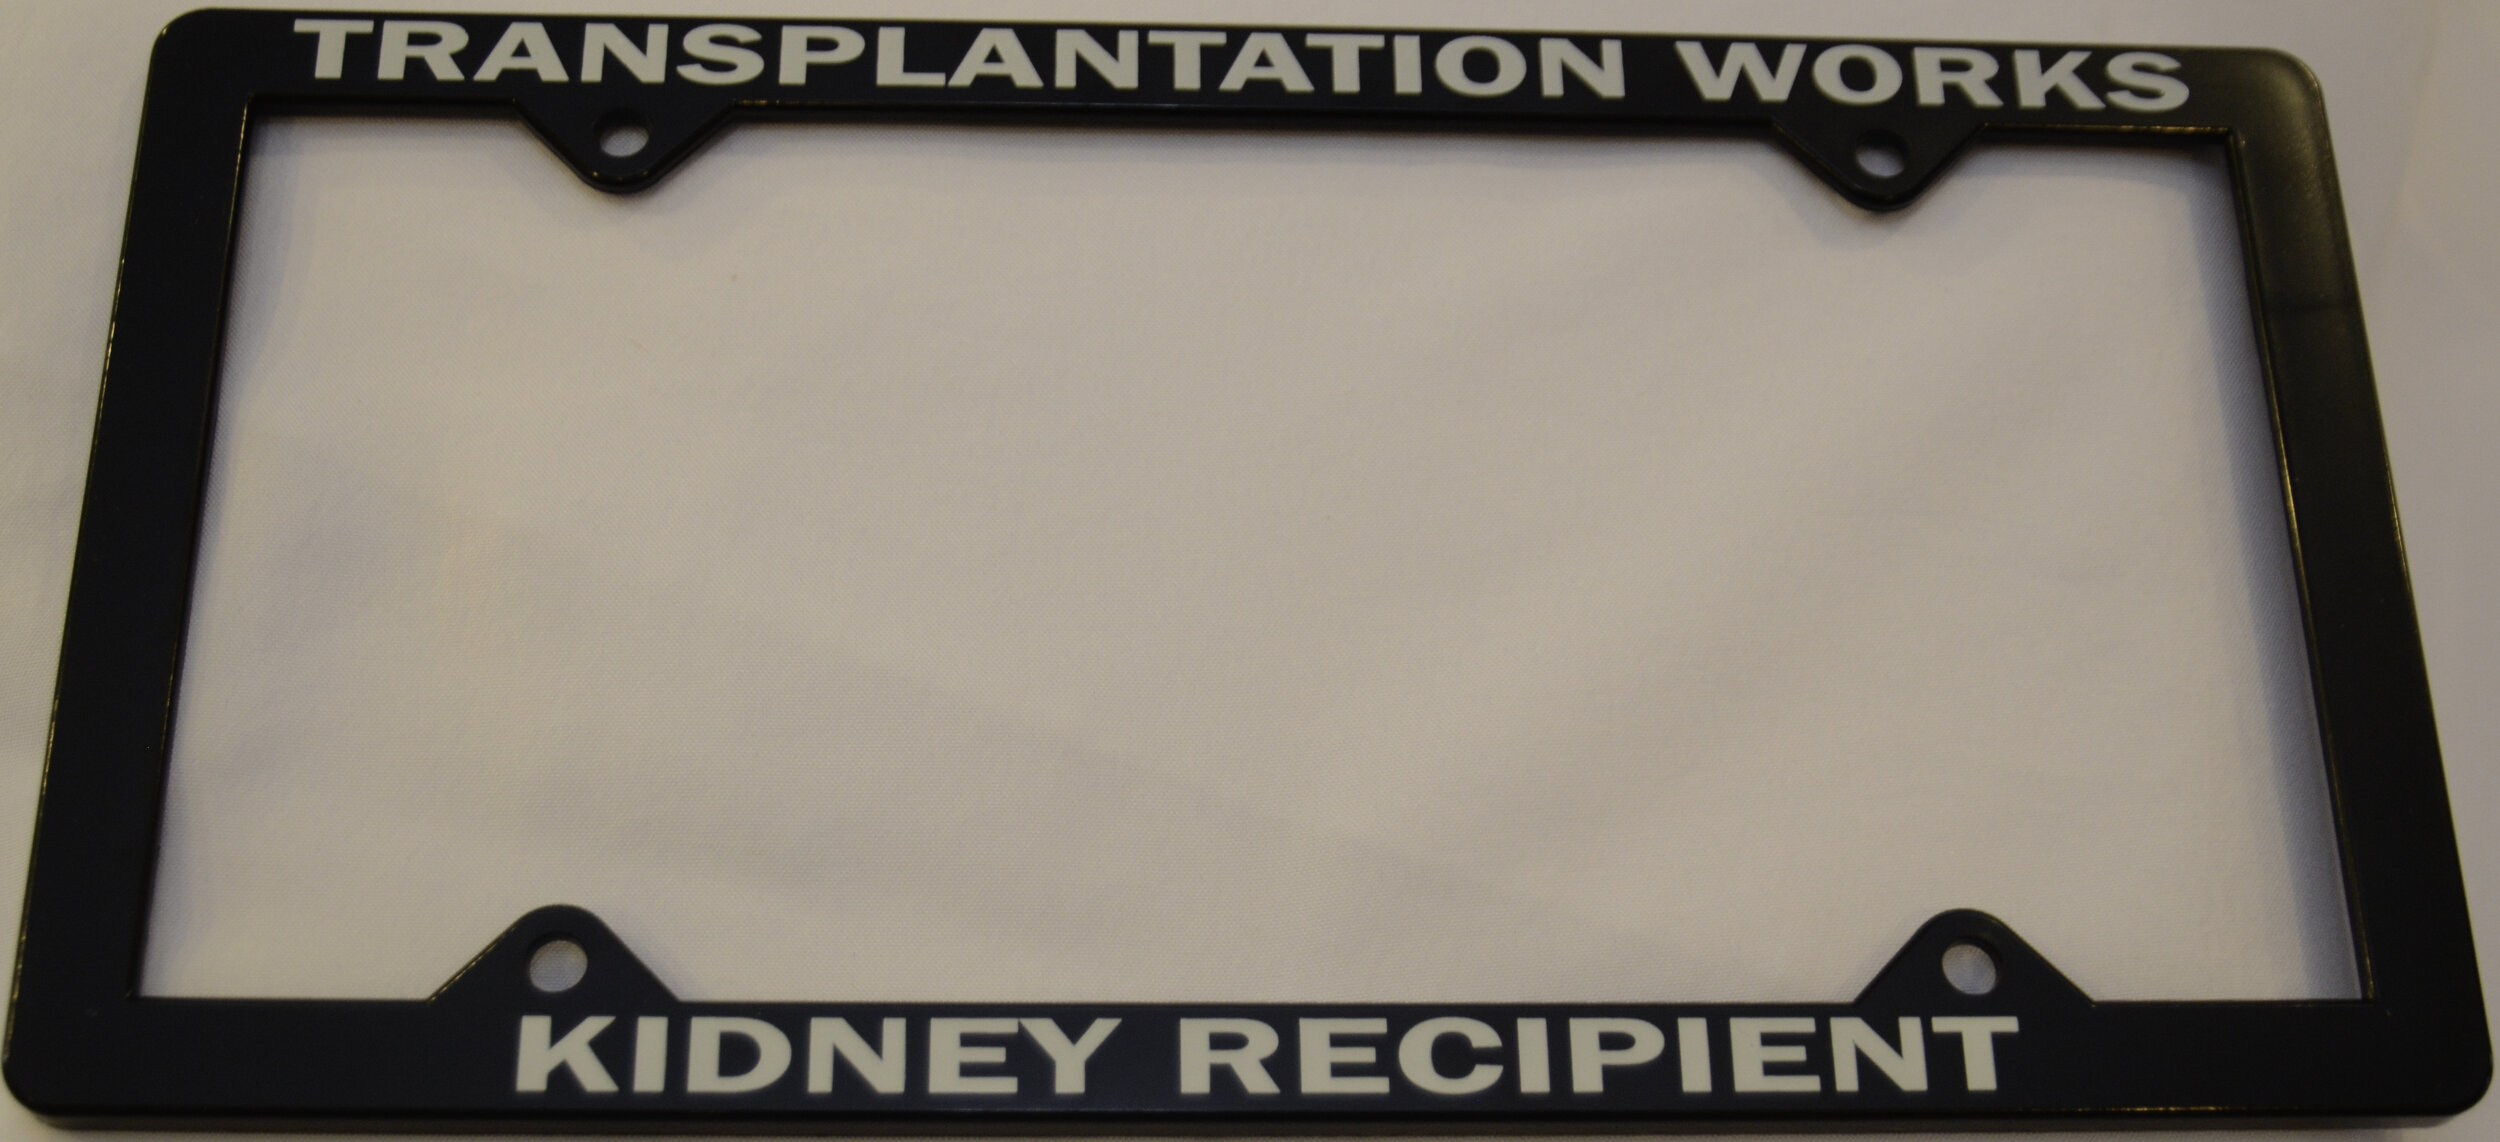 Transplantation Works Kidney Recipient License Plate Frame Organ Transplant Support Inc